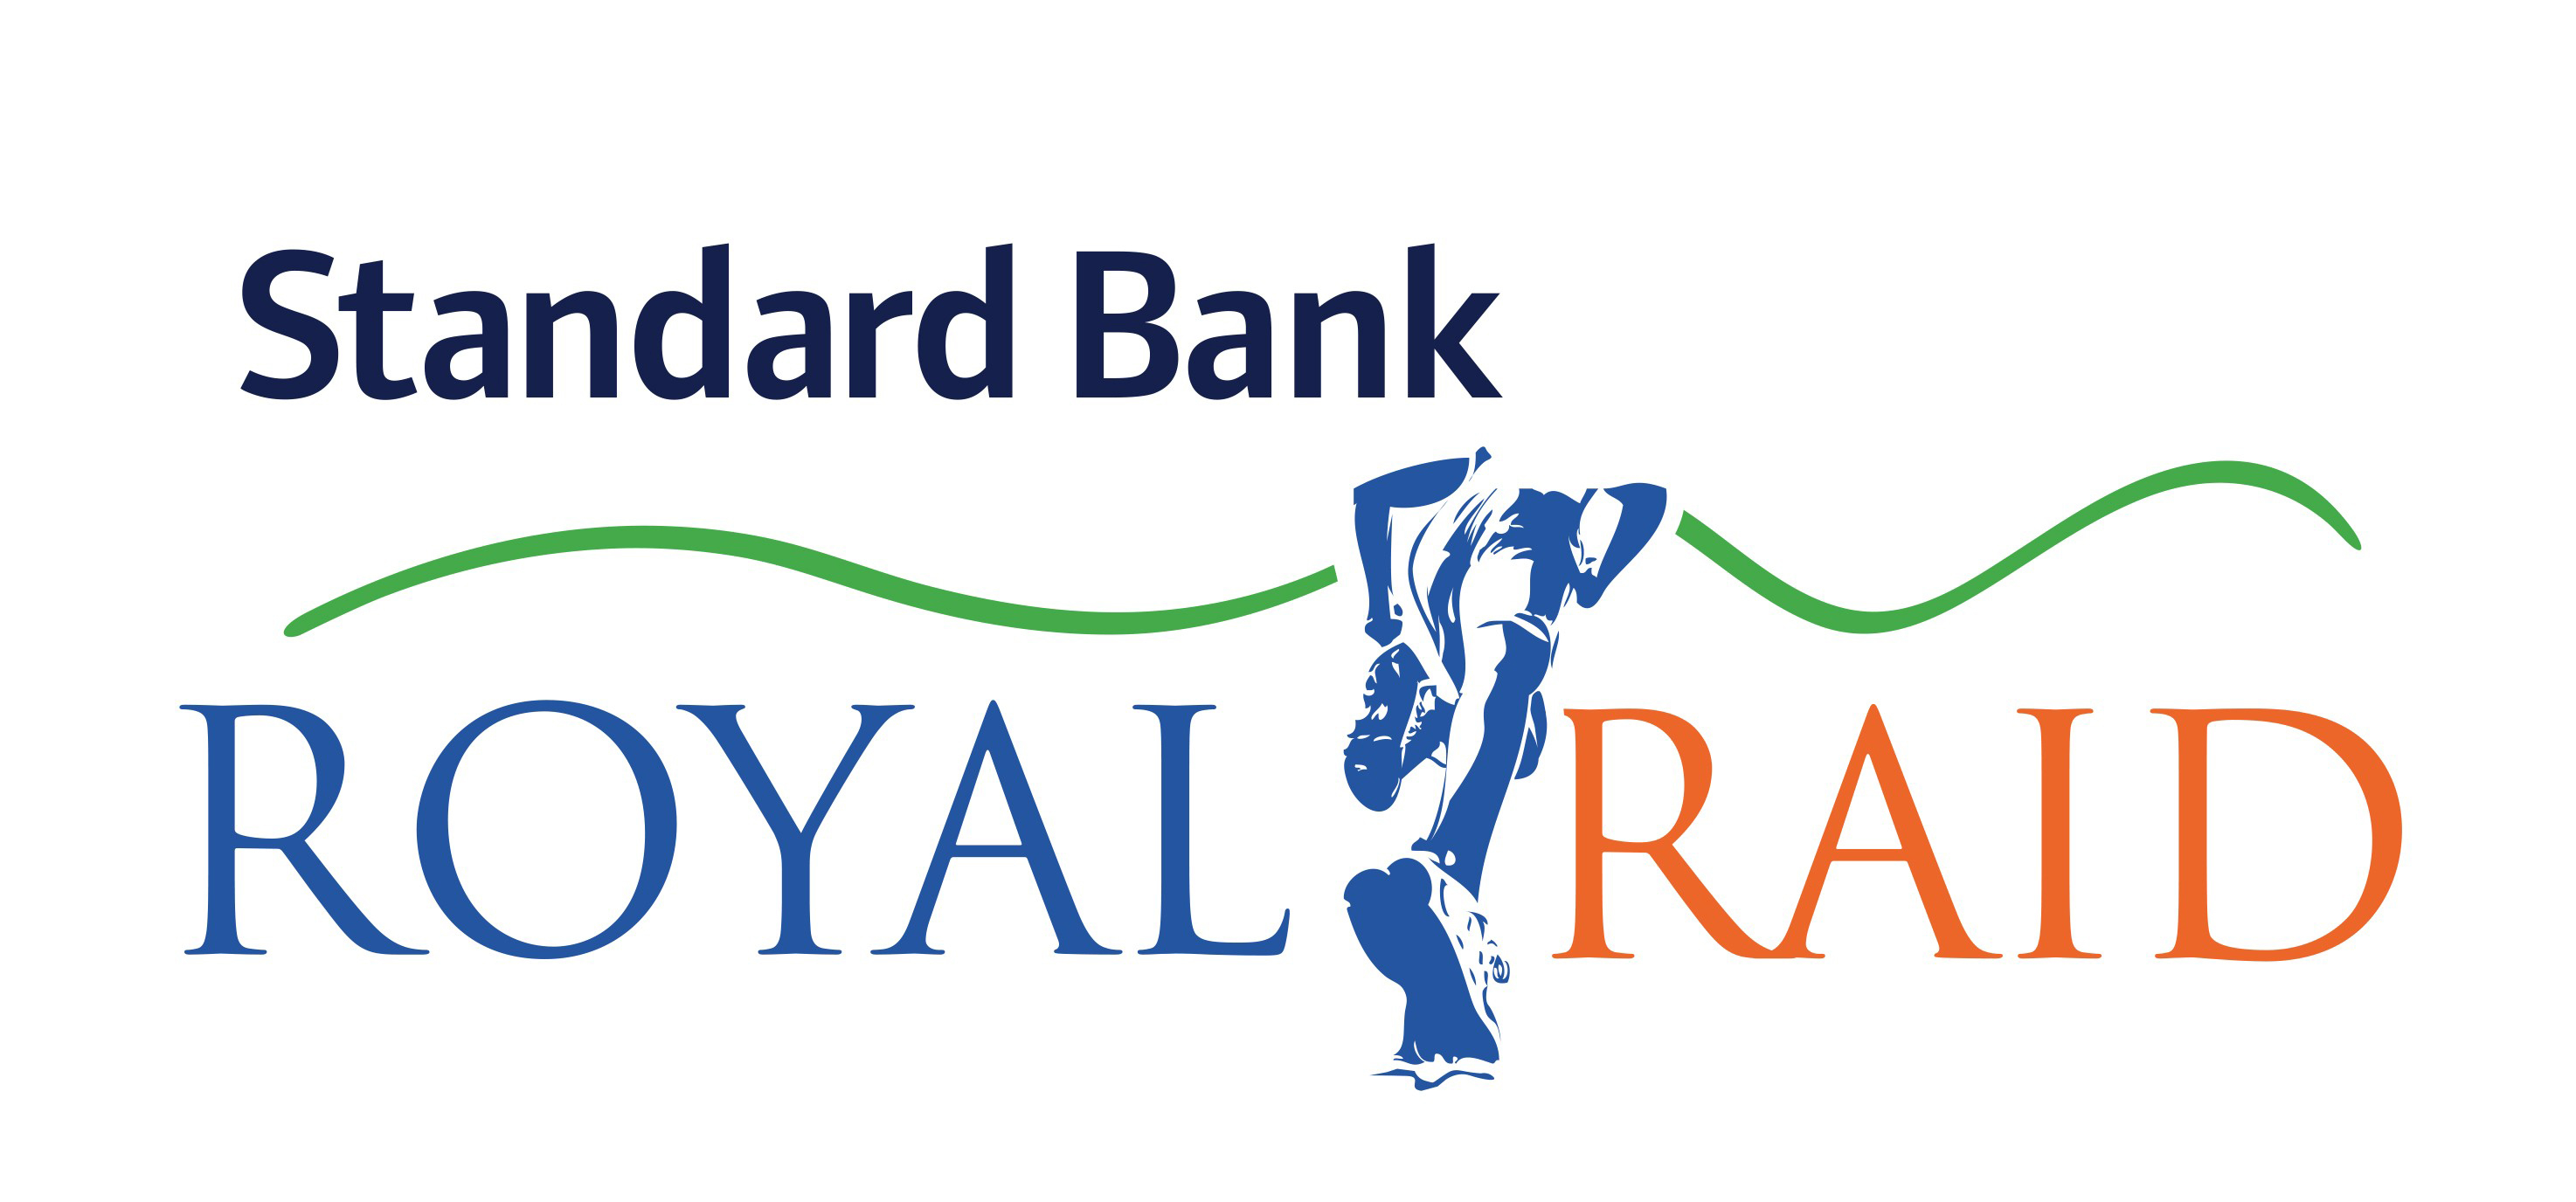 Standard Bank Royal Raid 2020